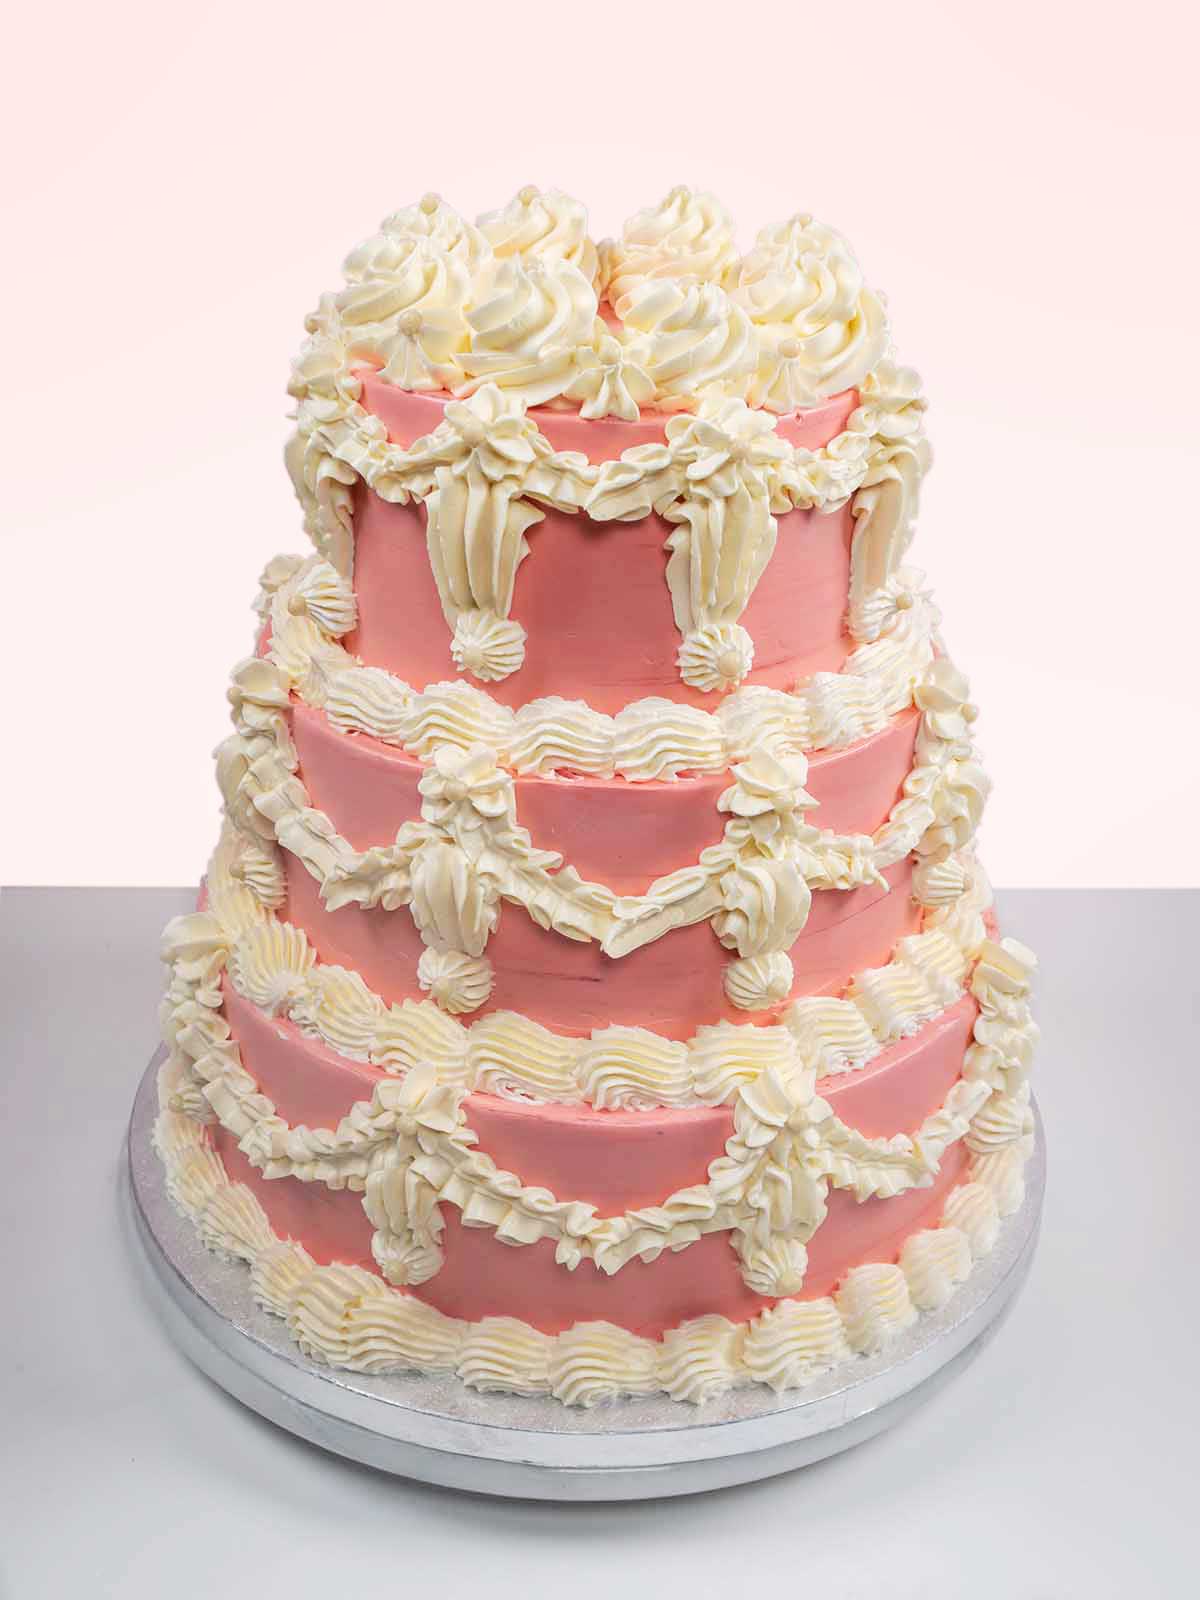 Regency Wedding Cake to Buy